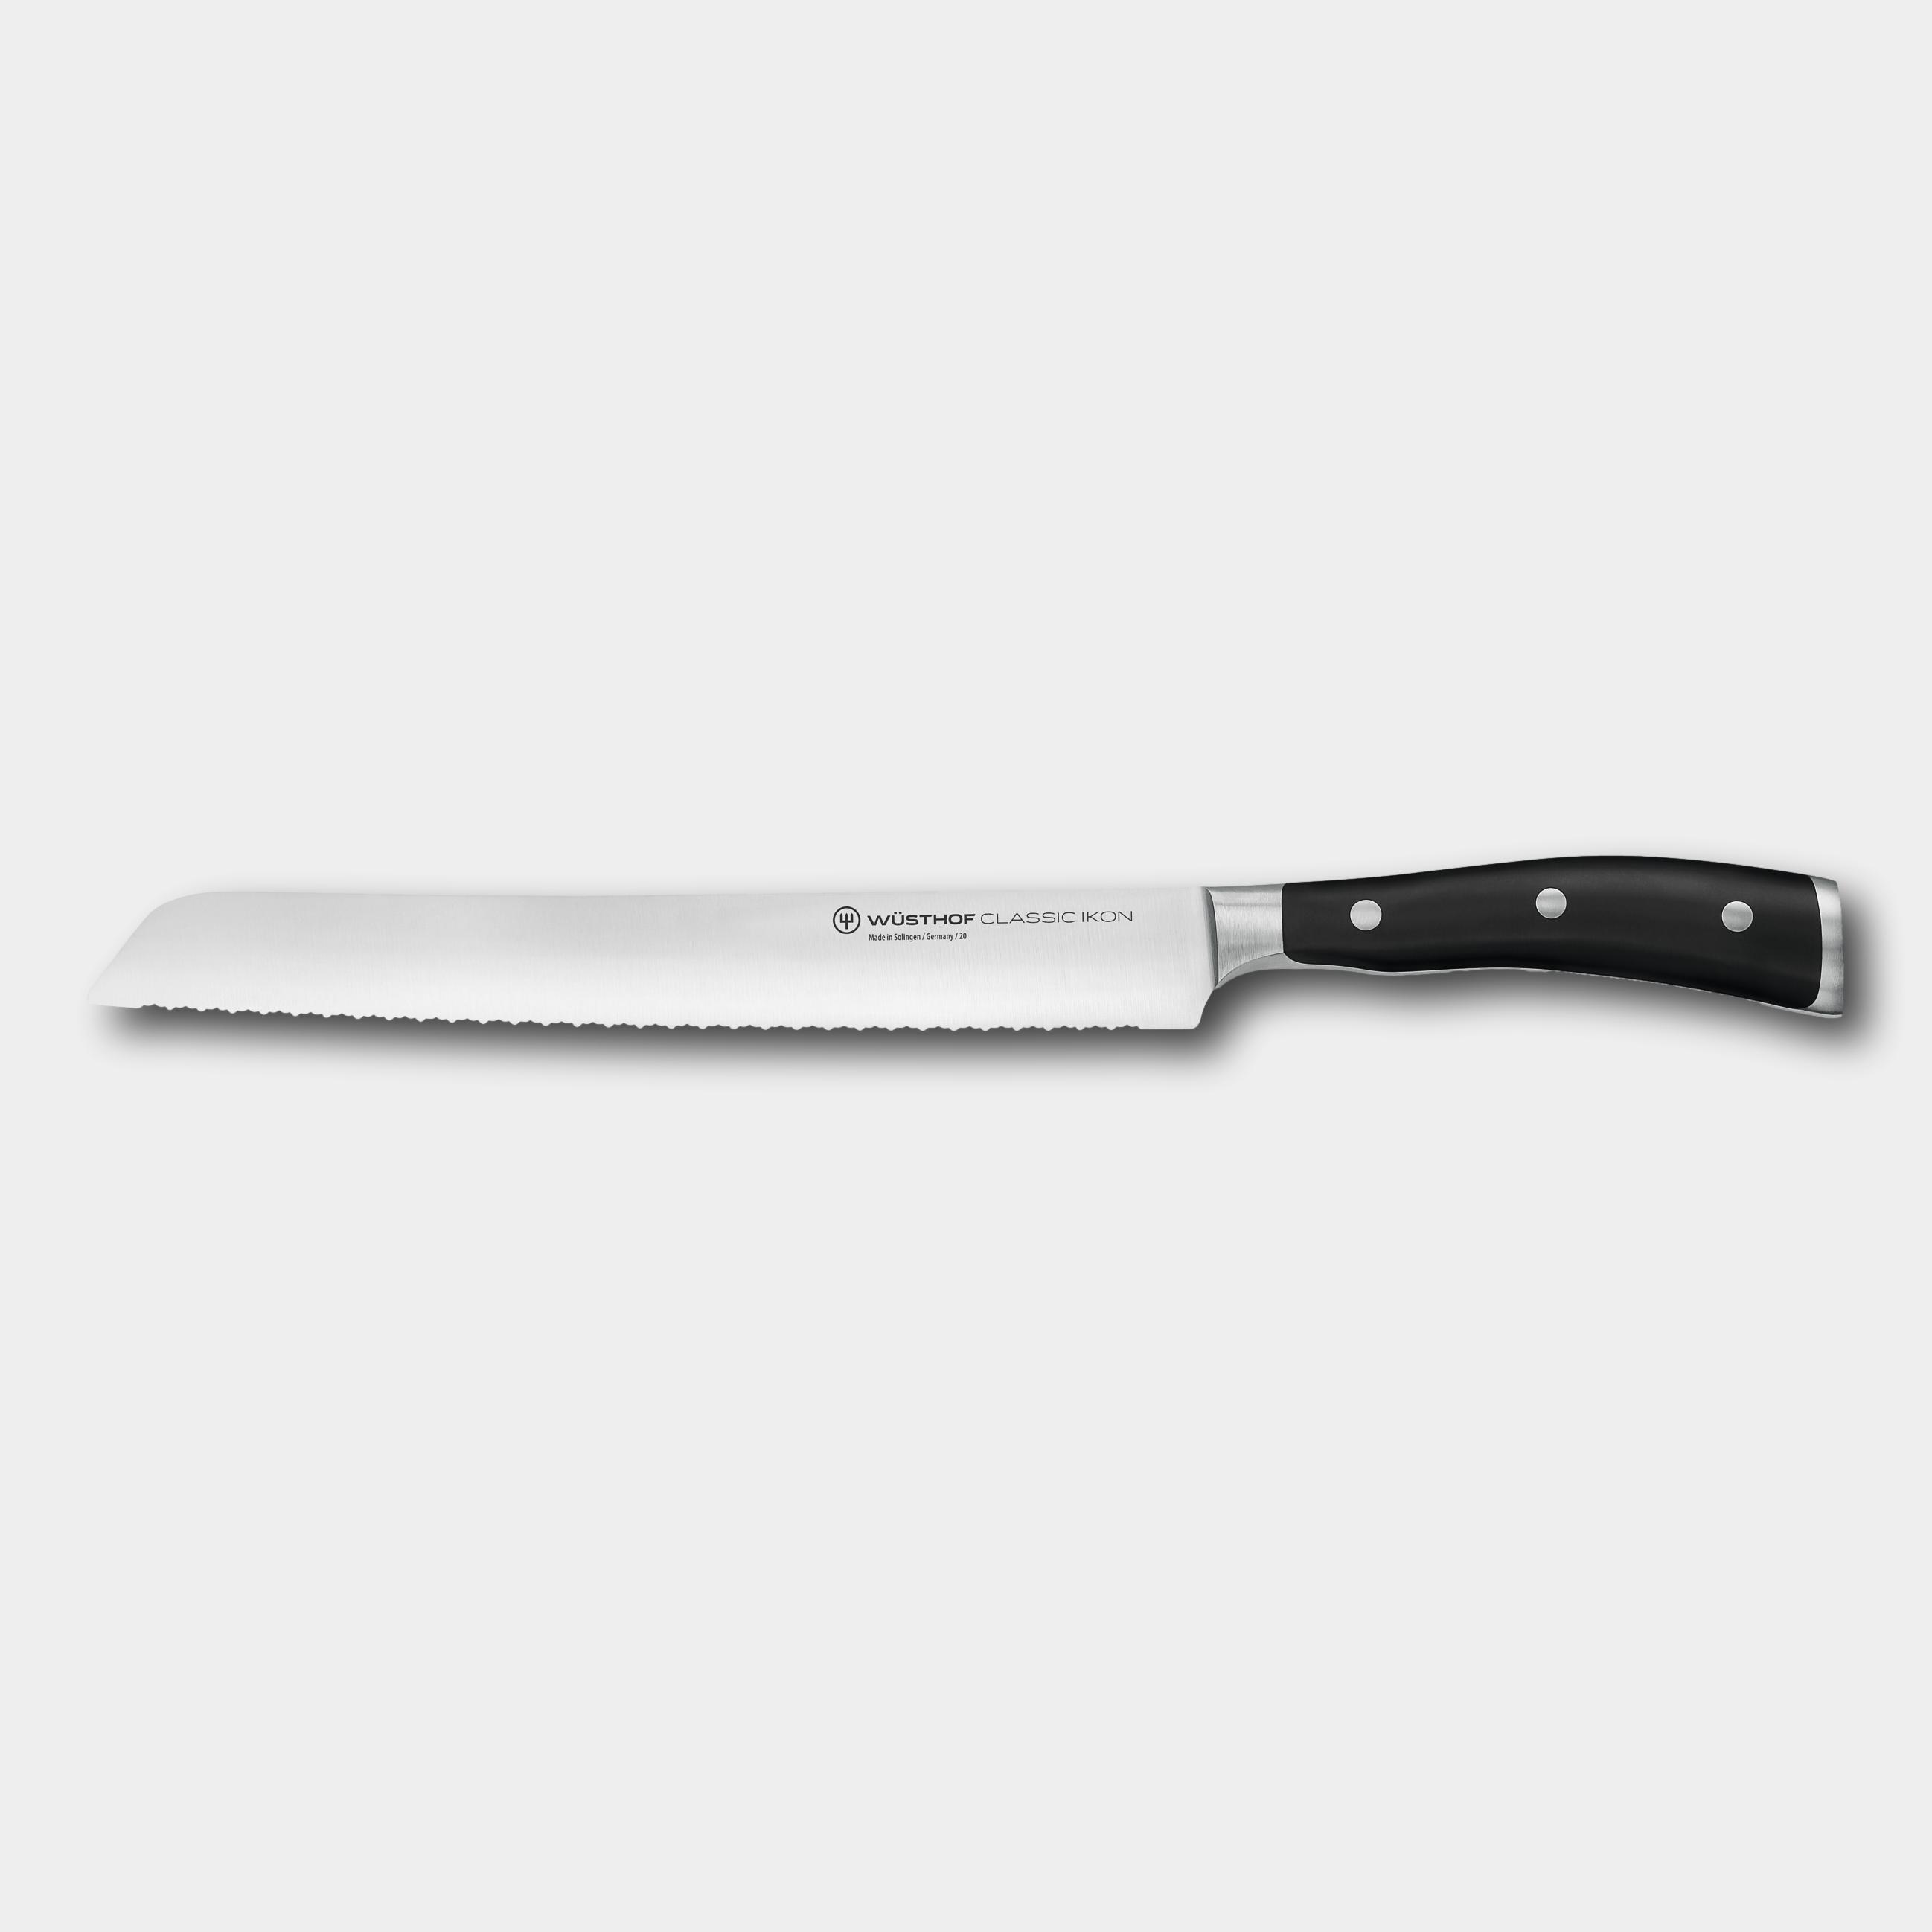 Wusthof Classic IKON 23cm Double Serrated Bread Knife